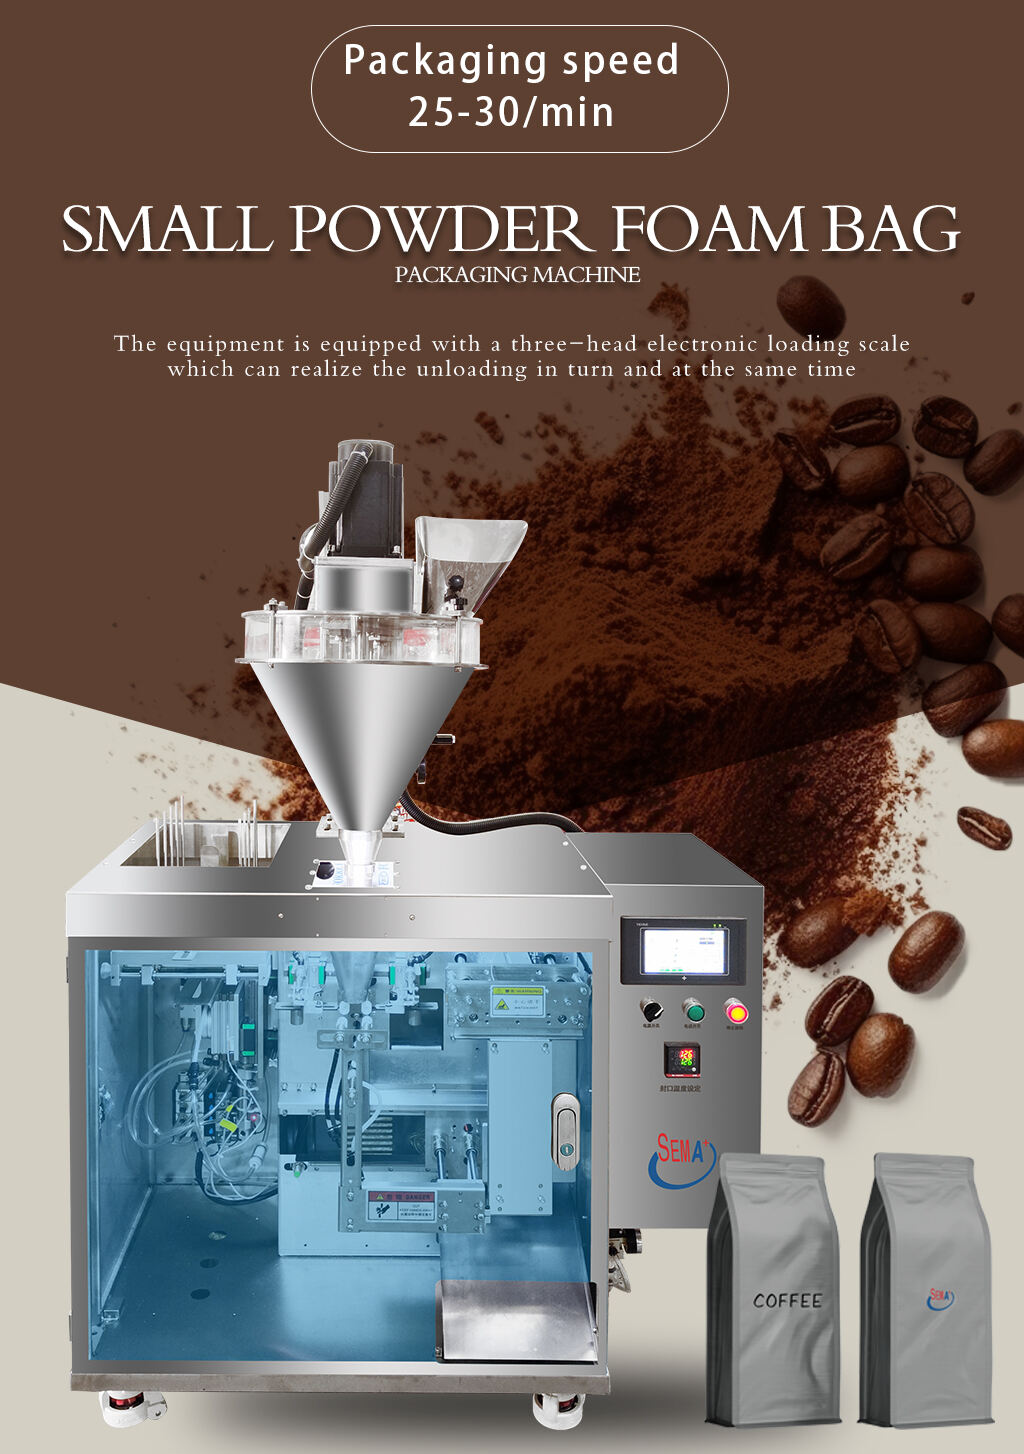 Small premade powder filling machine sachet packaging chili powder dry powder and packaging machine details